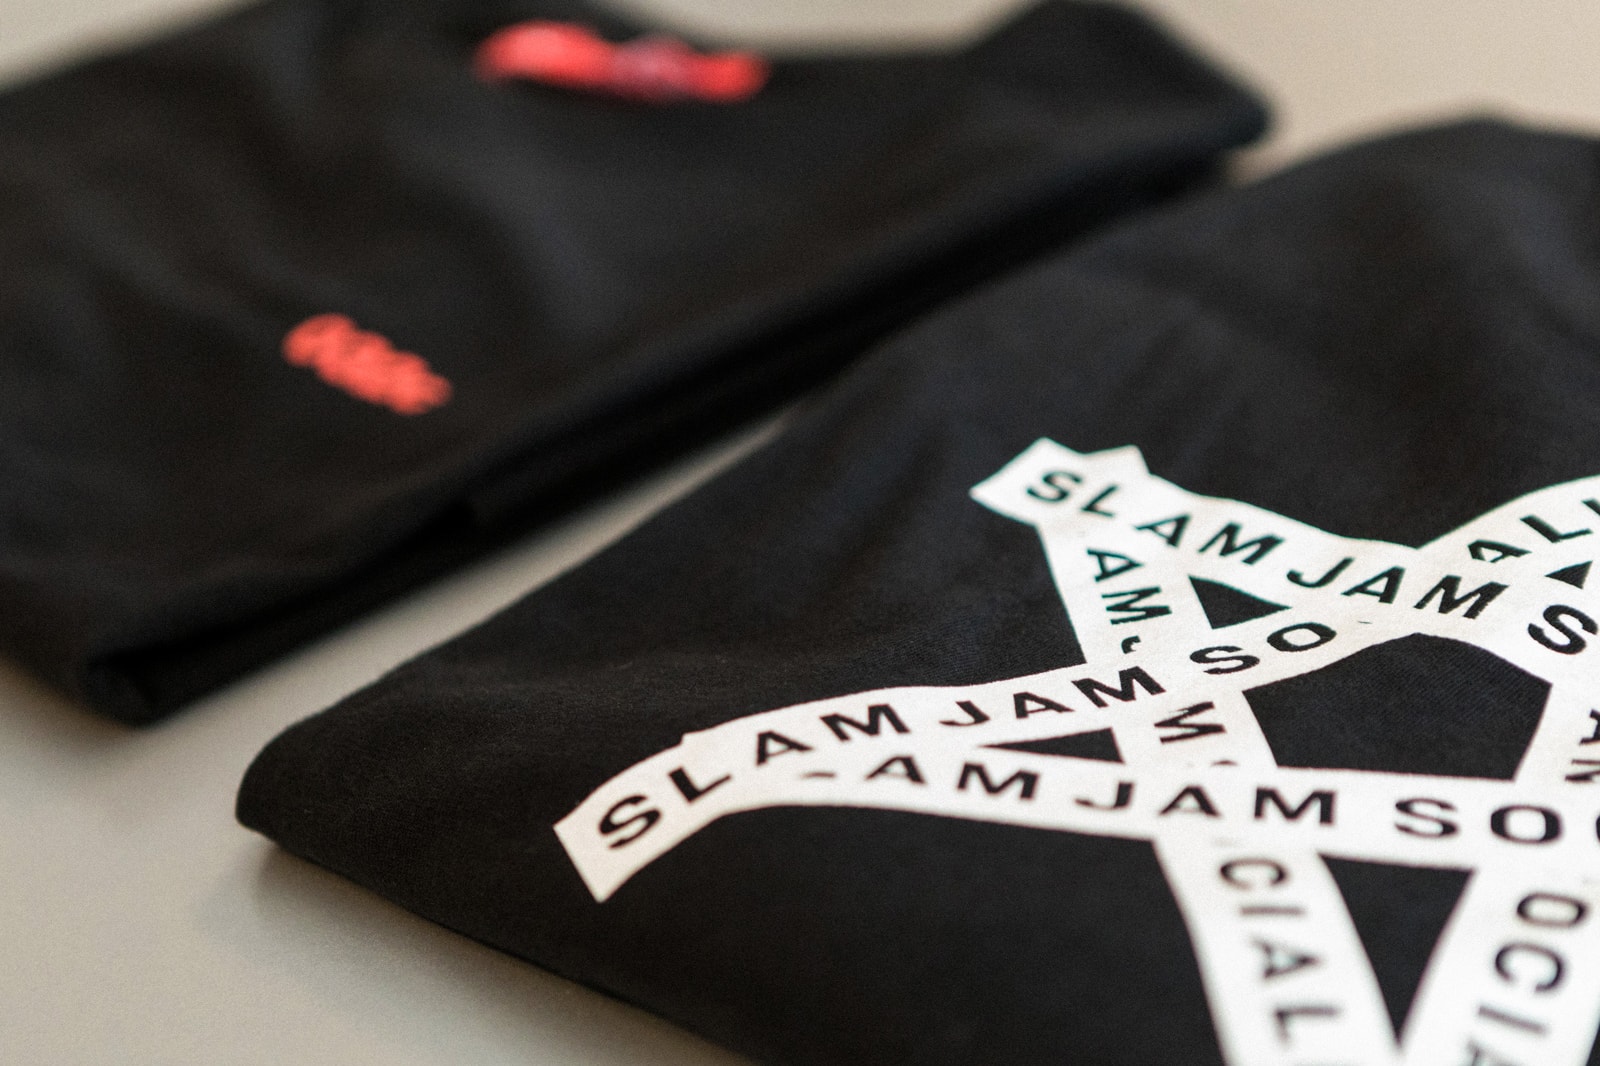 Slam Jam Socialism New Store in Ferrara